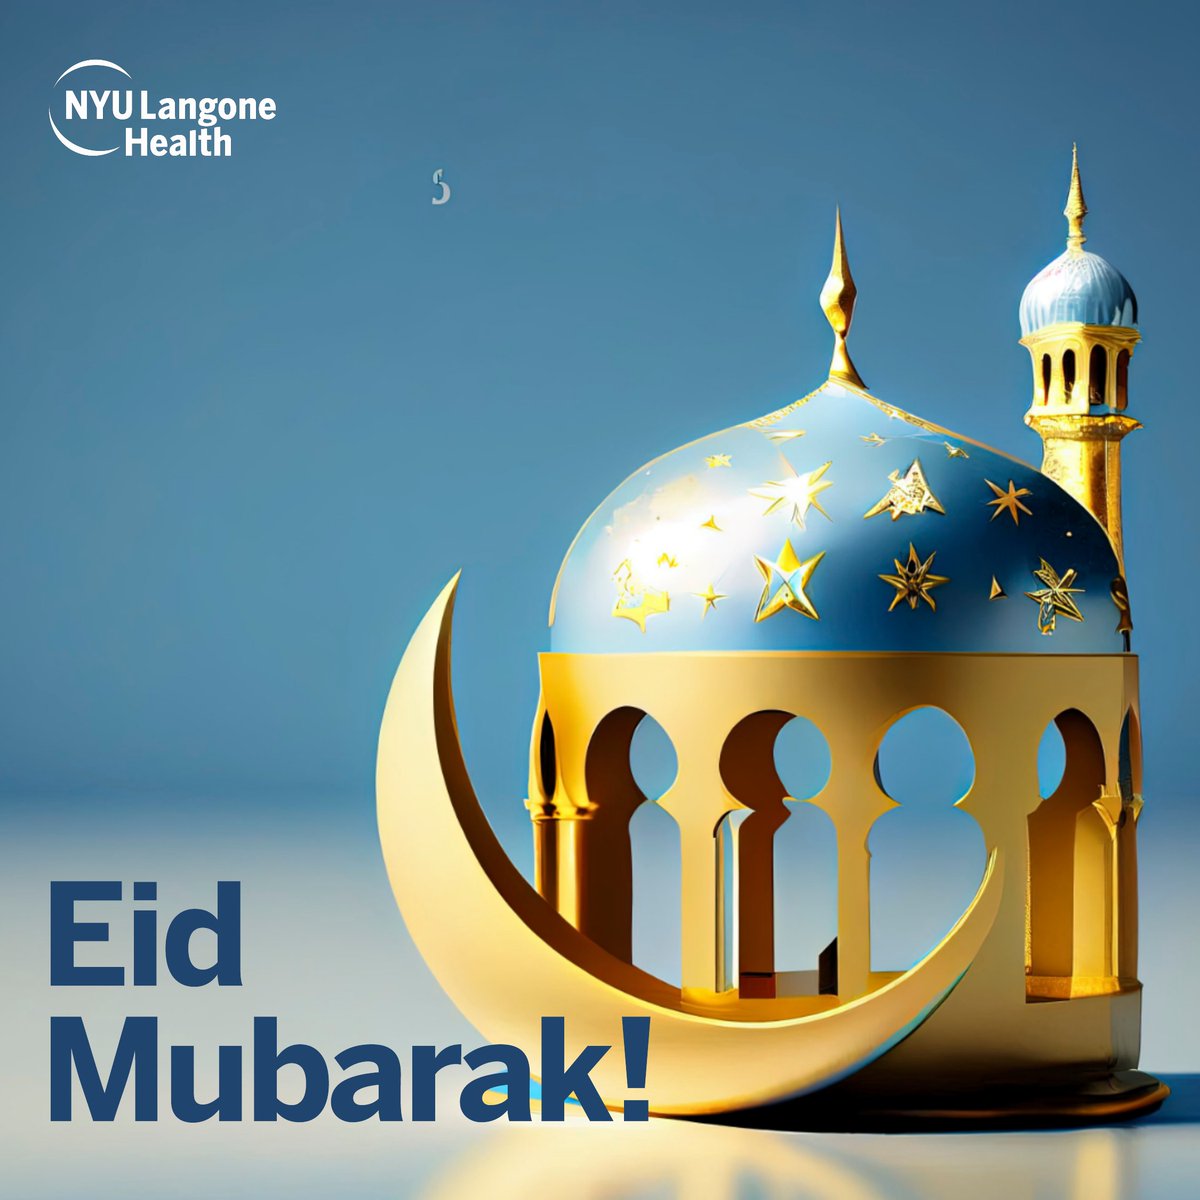 Eid Mukarak! Wishing fun, happiness, and blessings to those in our @nyulangone family celebrating this evening! 🌙 #eid #eidmubarak #ramadan